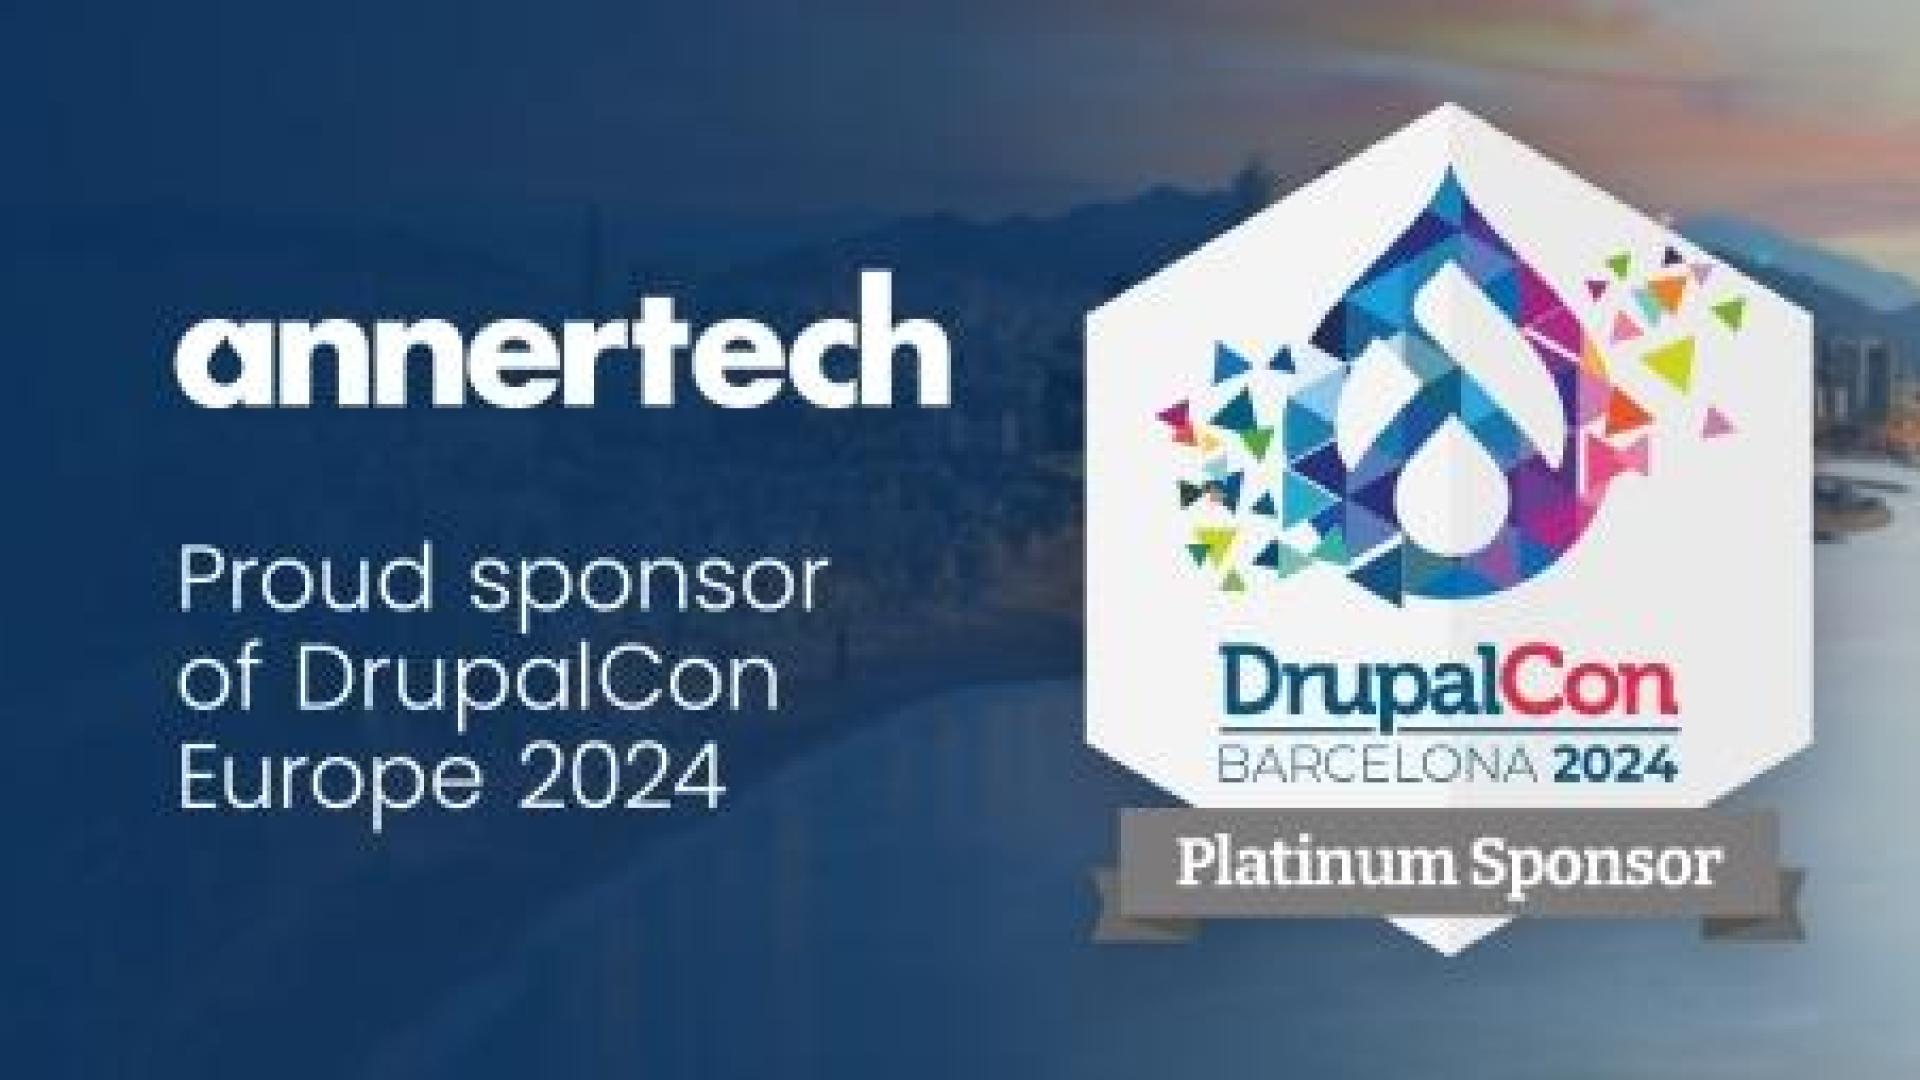 Annertech Platinum Sponsors of DrupalCon Europe 2024